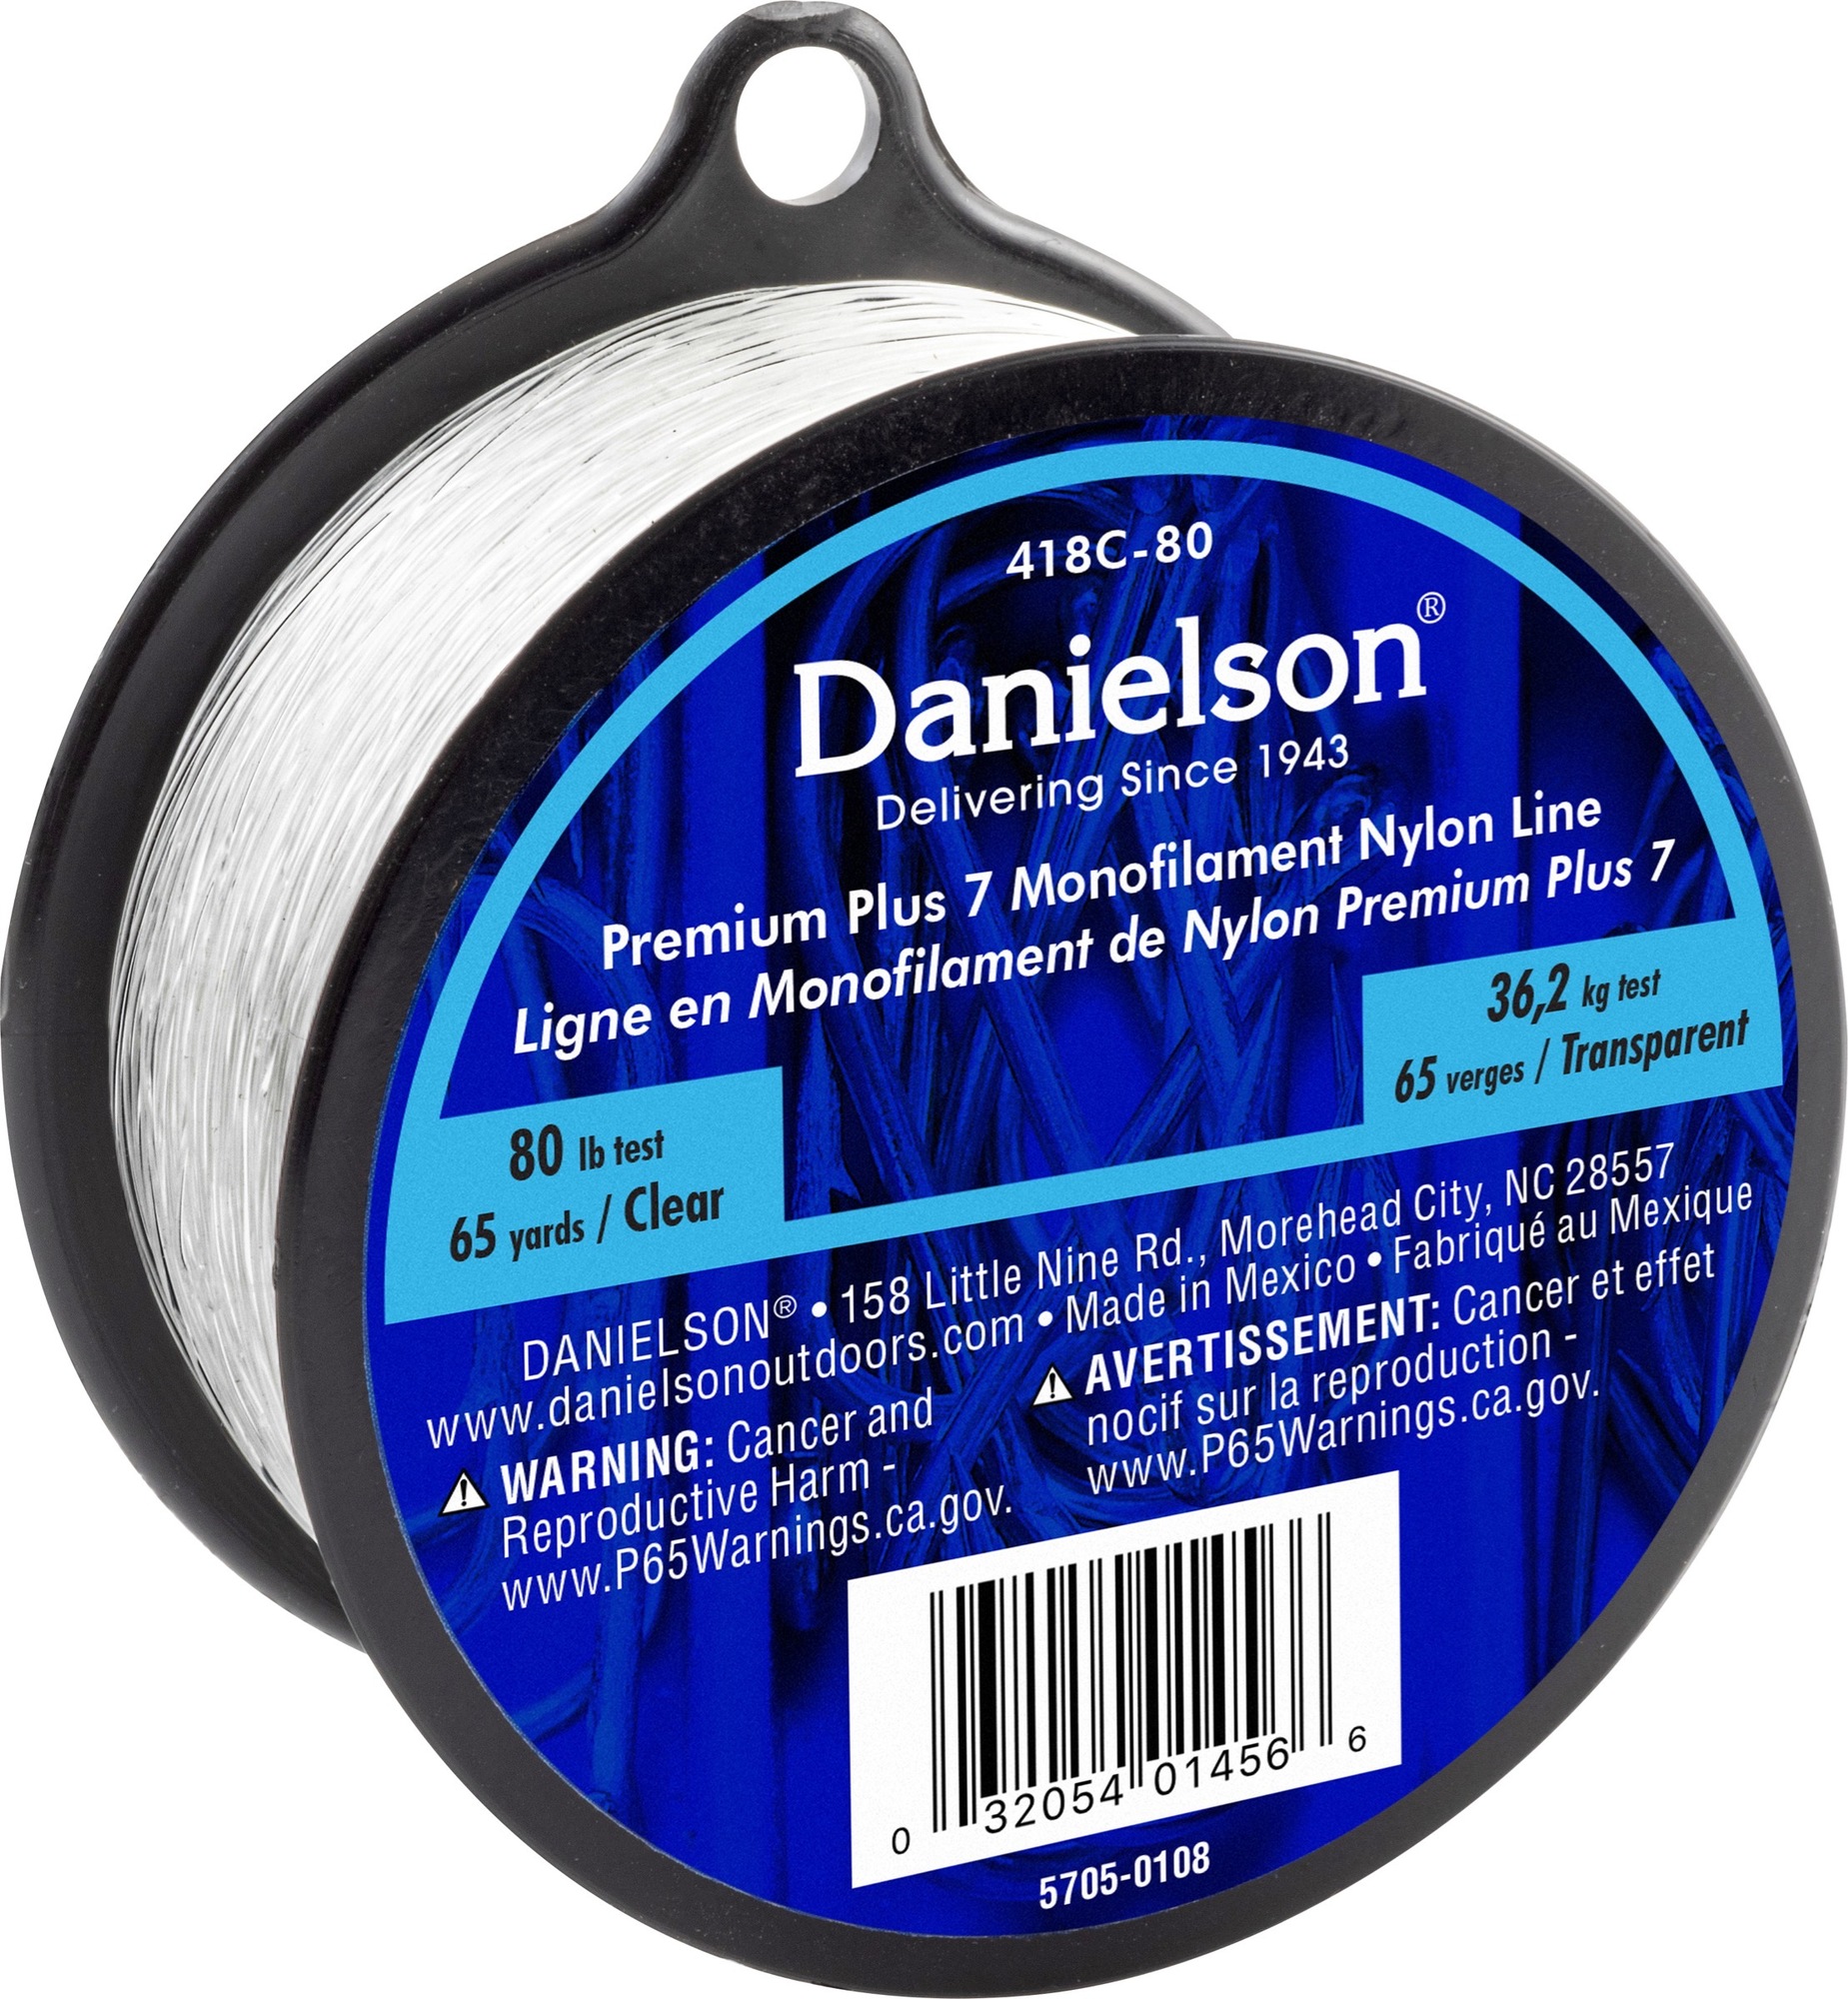 Danielson 418B-80 Plus 7 Mono Nylon Line Blue 80 lb